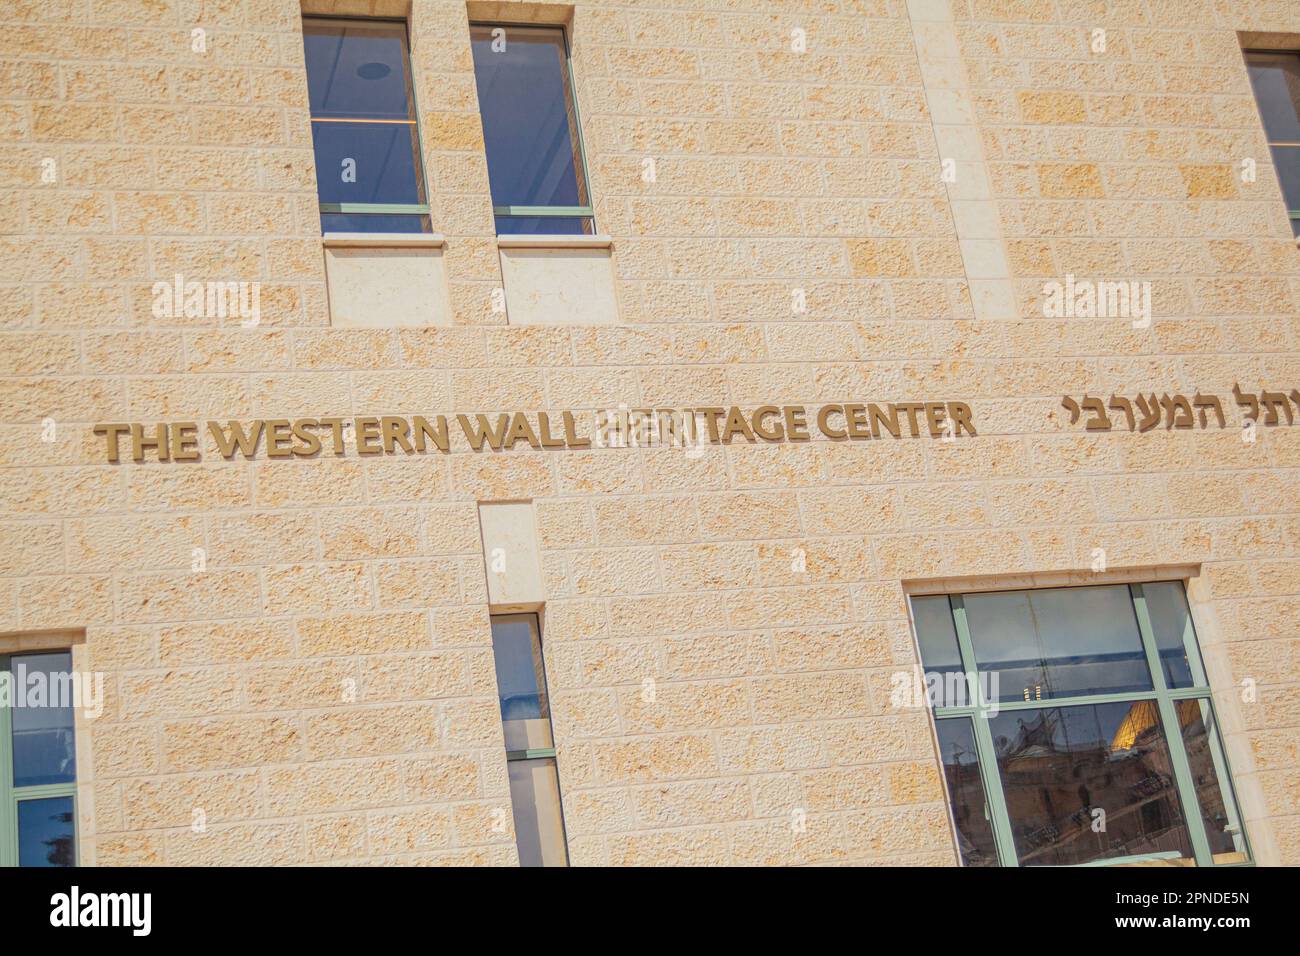 Das Western Wall Heritage Centre Stockfoto